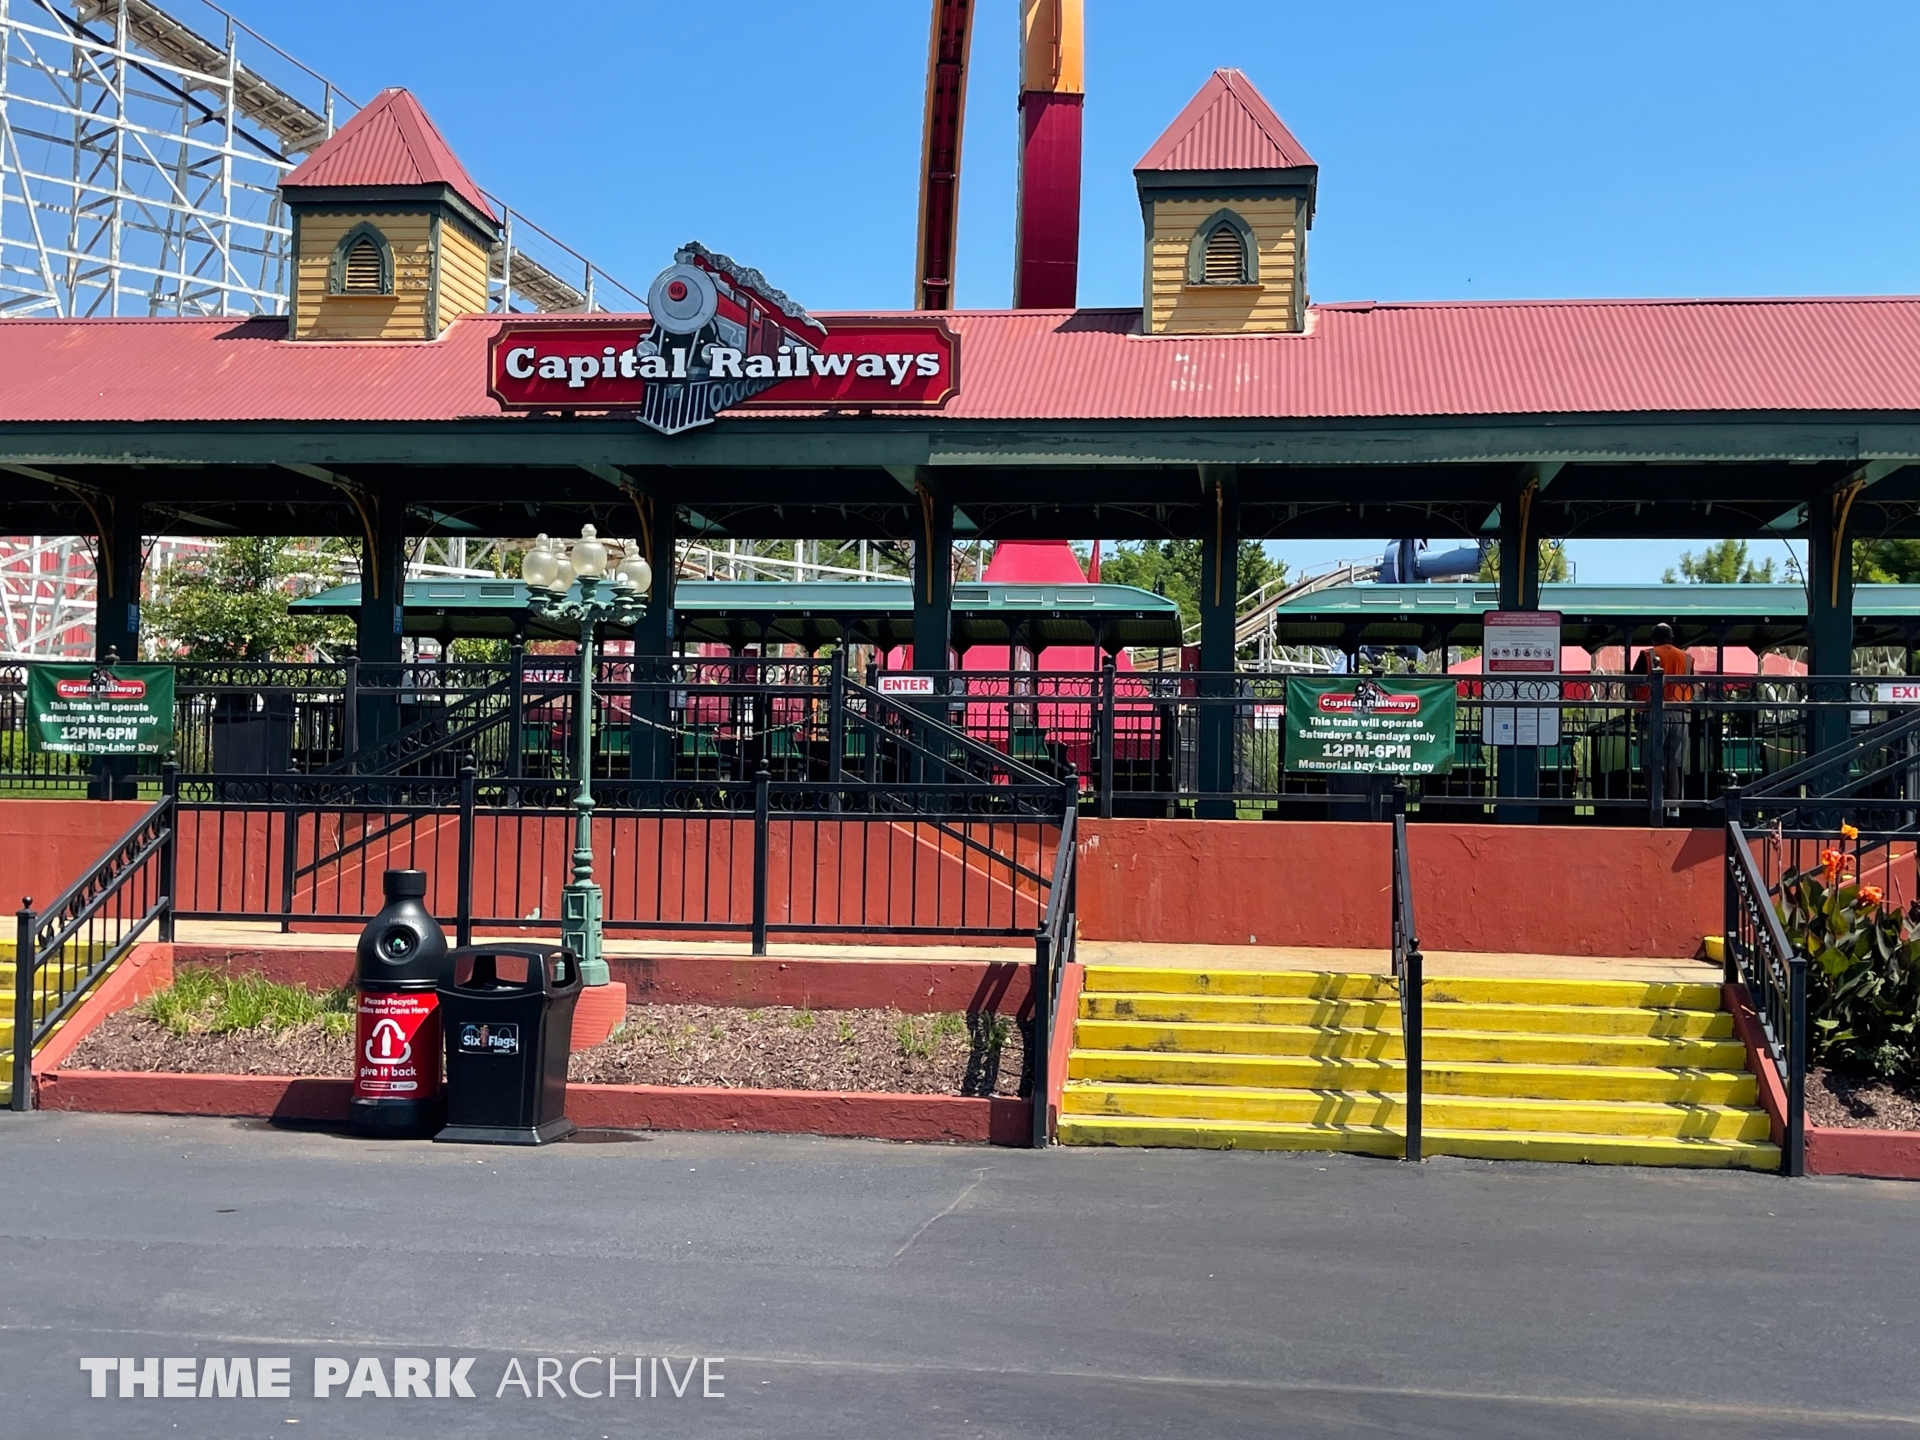 Capital Railways at Six Flags America